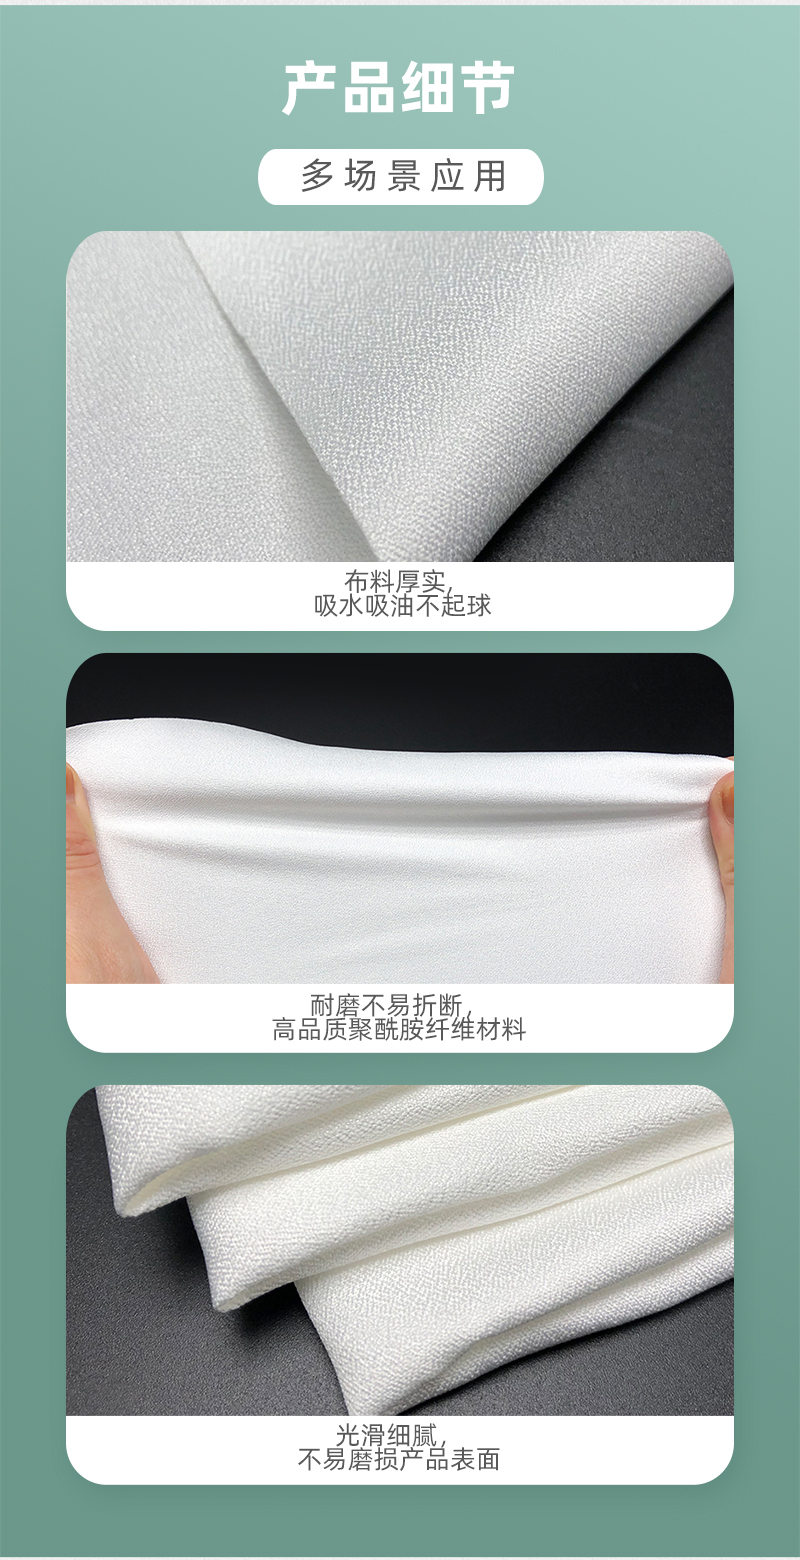 Cleanroom Cloth (2)